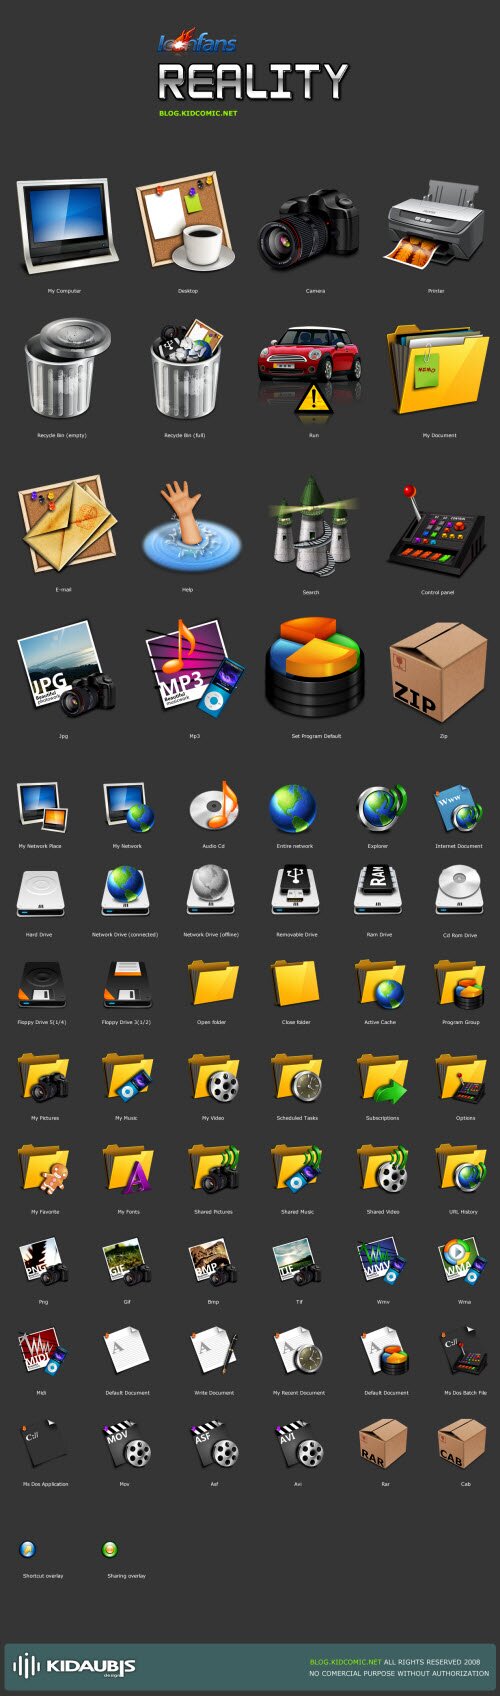 icon pack034 Free Mac/Windows/Linux Icon Packs [Set 13] PNG/ICO